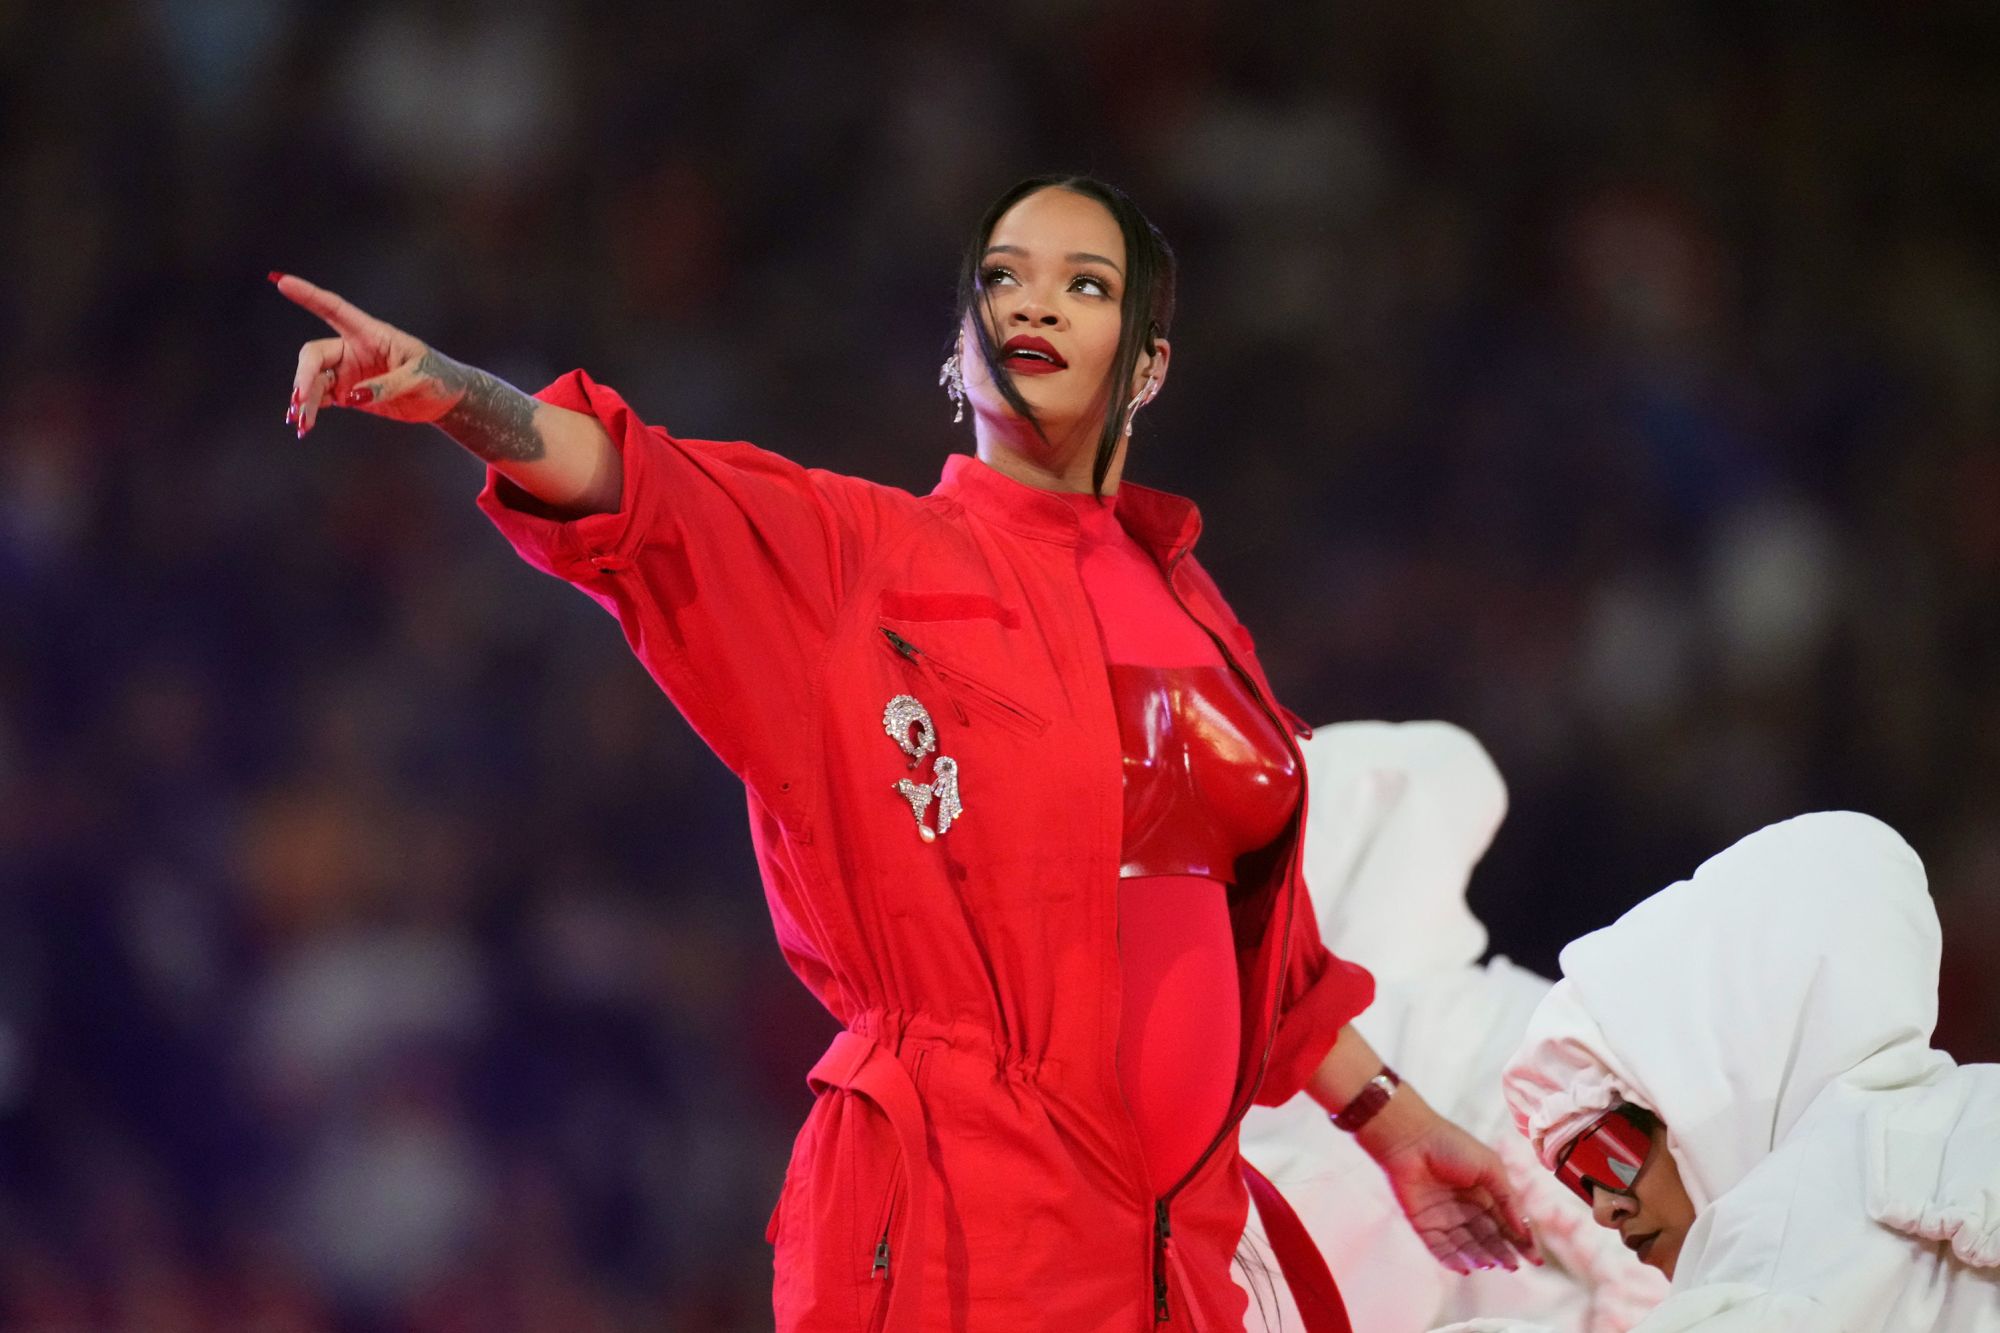 Rihanna Just Turned Soccer Into High Fashion